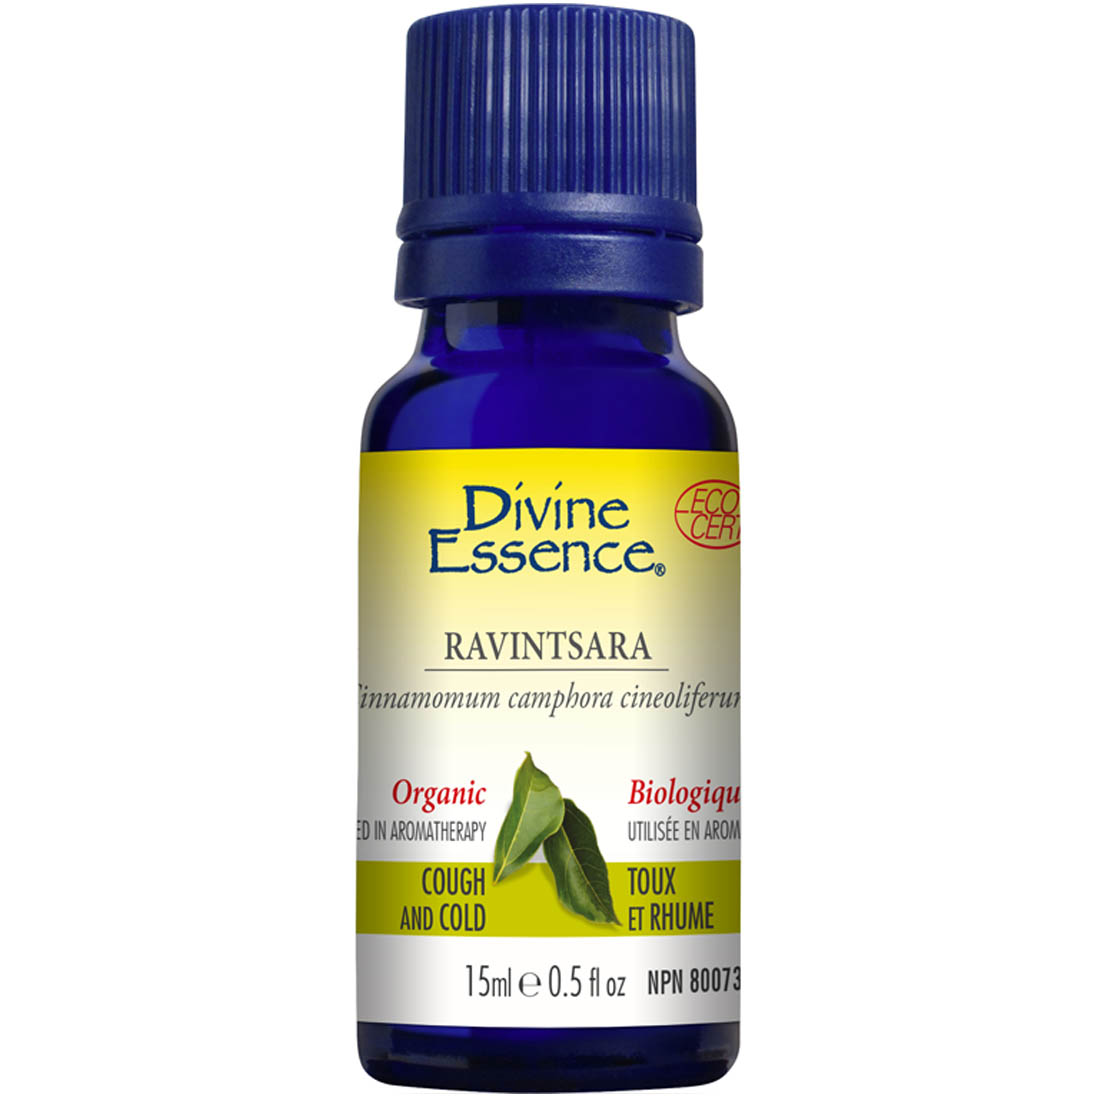 Divine Essence Ravintsara Essential Oil (Organic), 15ml